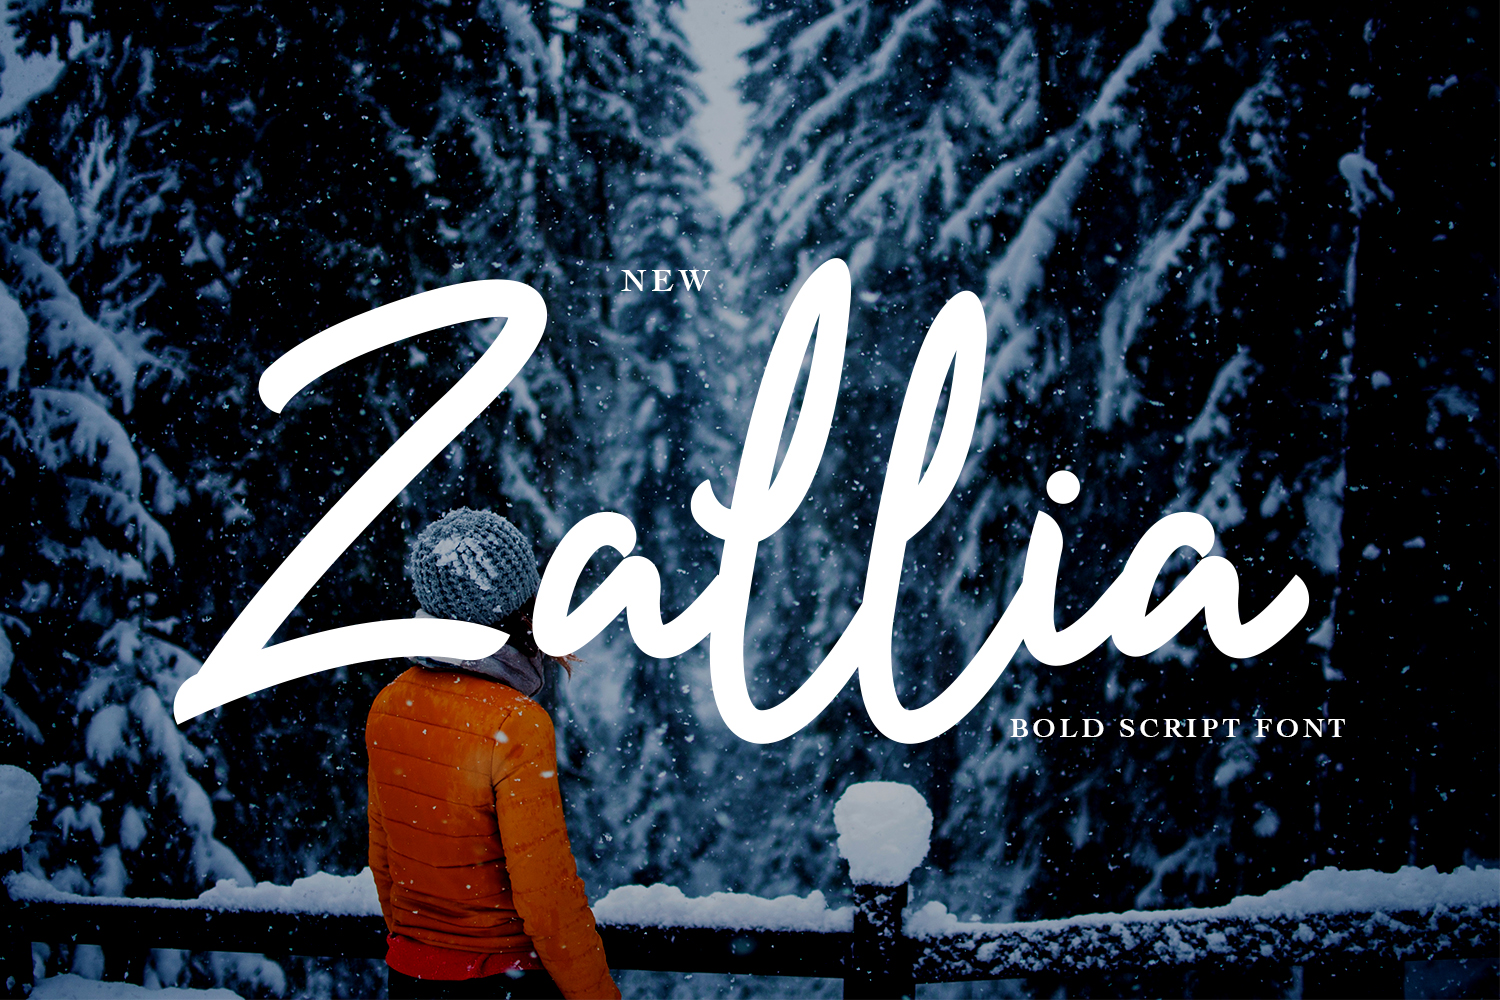 Download Free Download Zallia Free Font Fontsme Com Fonts Typography